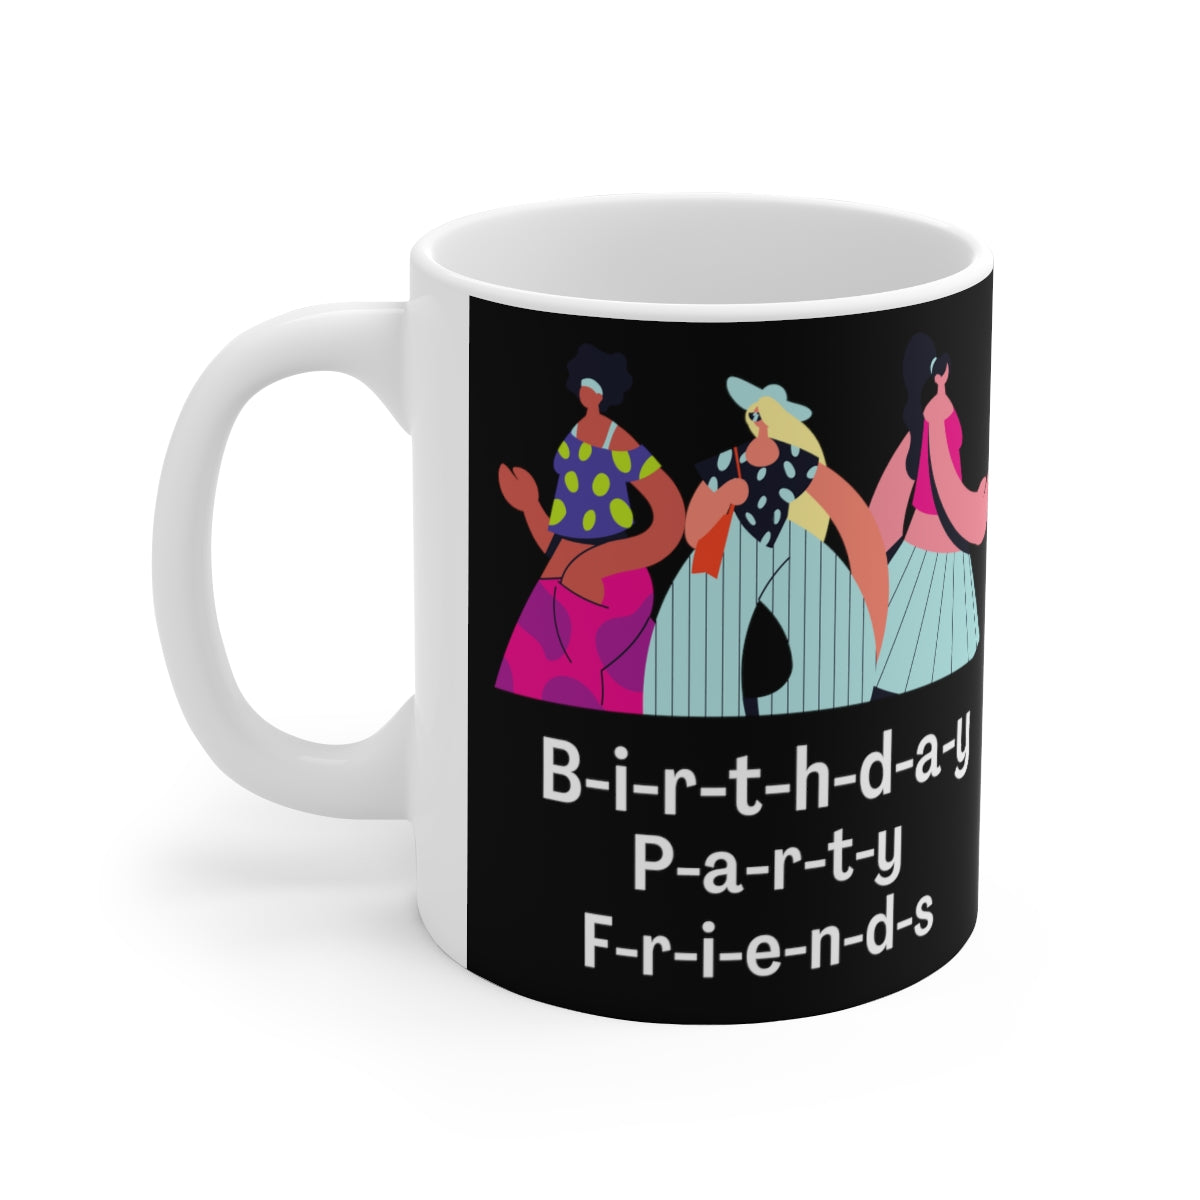 FRIENDS COFFEE MUG, BIRTHDAY PARTY FRIENDS MUGS, GIFT FOR FRIENDS, Ceramic Mug 11oz